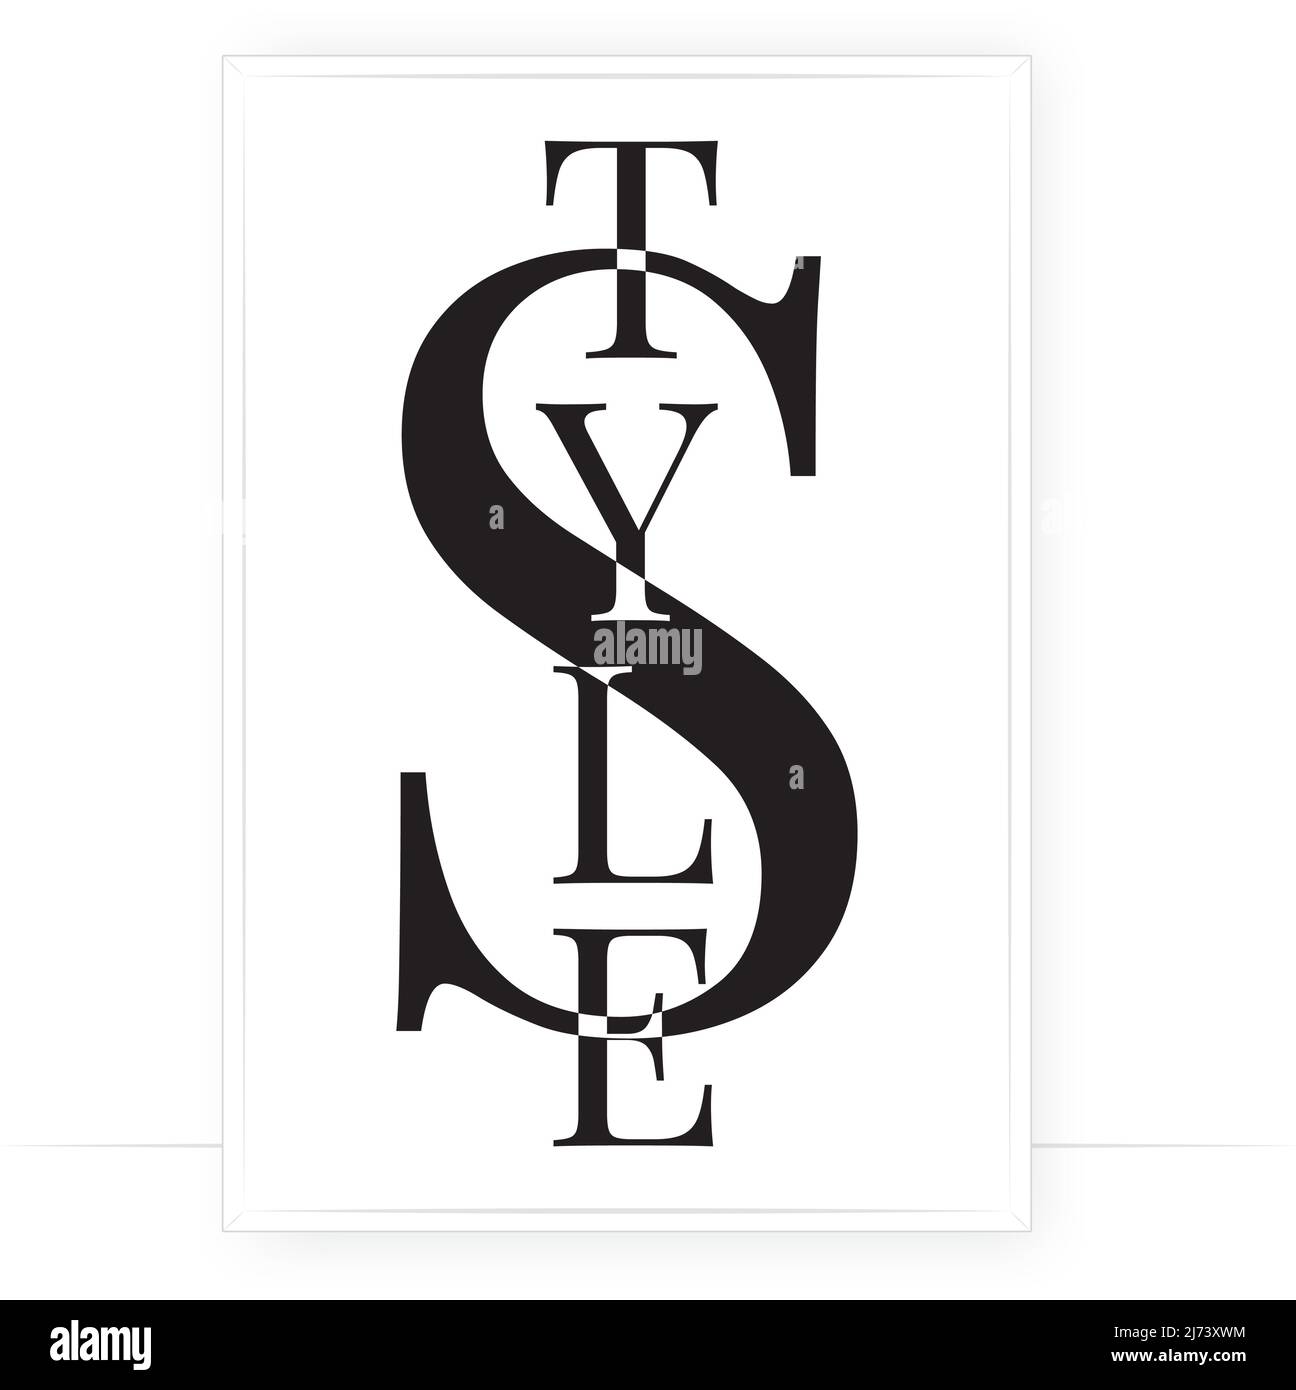 Style, vector. Scandinavian minimalist typographic poster design. Black and white wall art design. Stock Vector